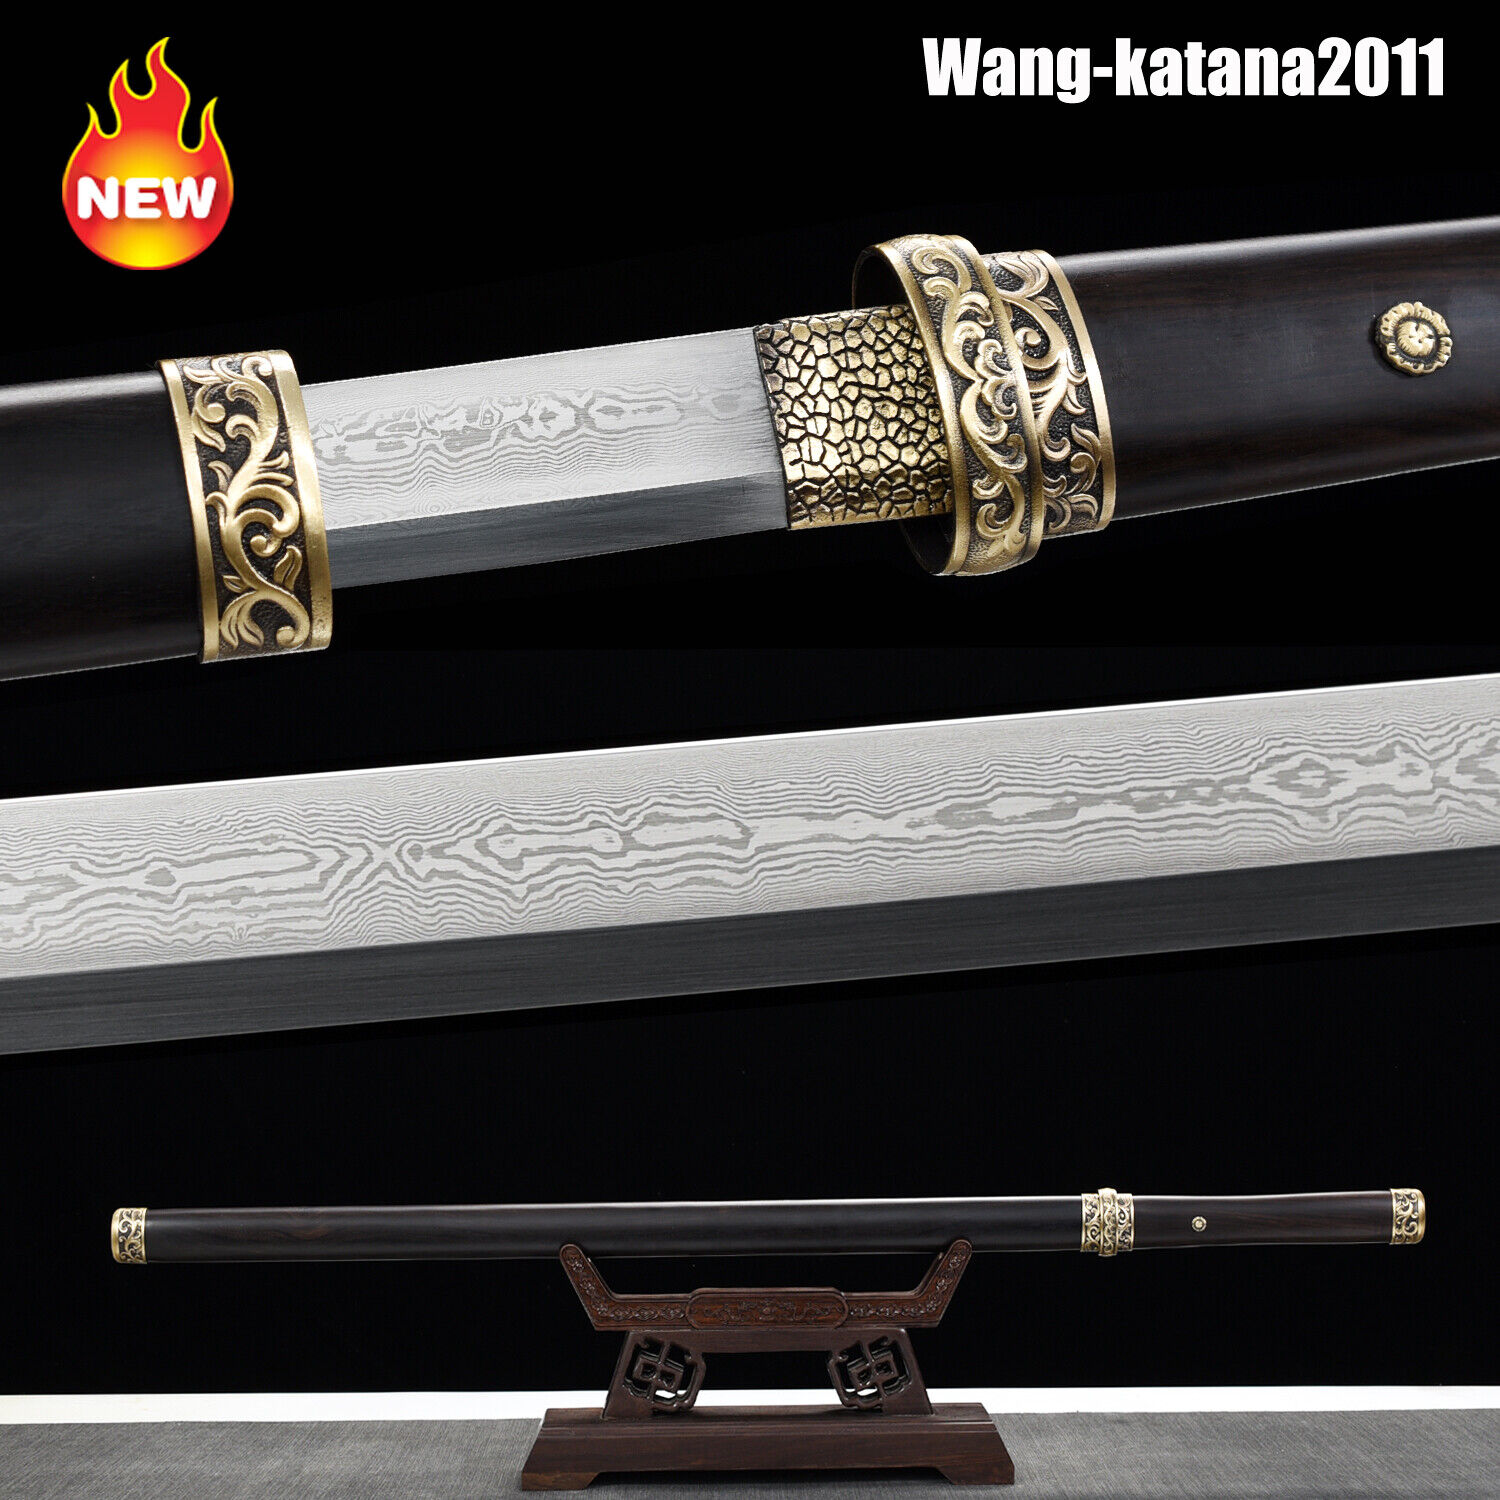 105CM Handmade Chinese Folded Steel Ebony Tang Dao 唐刀 Functional Full-tang Sword